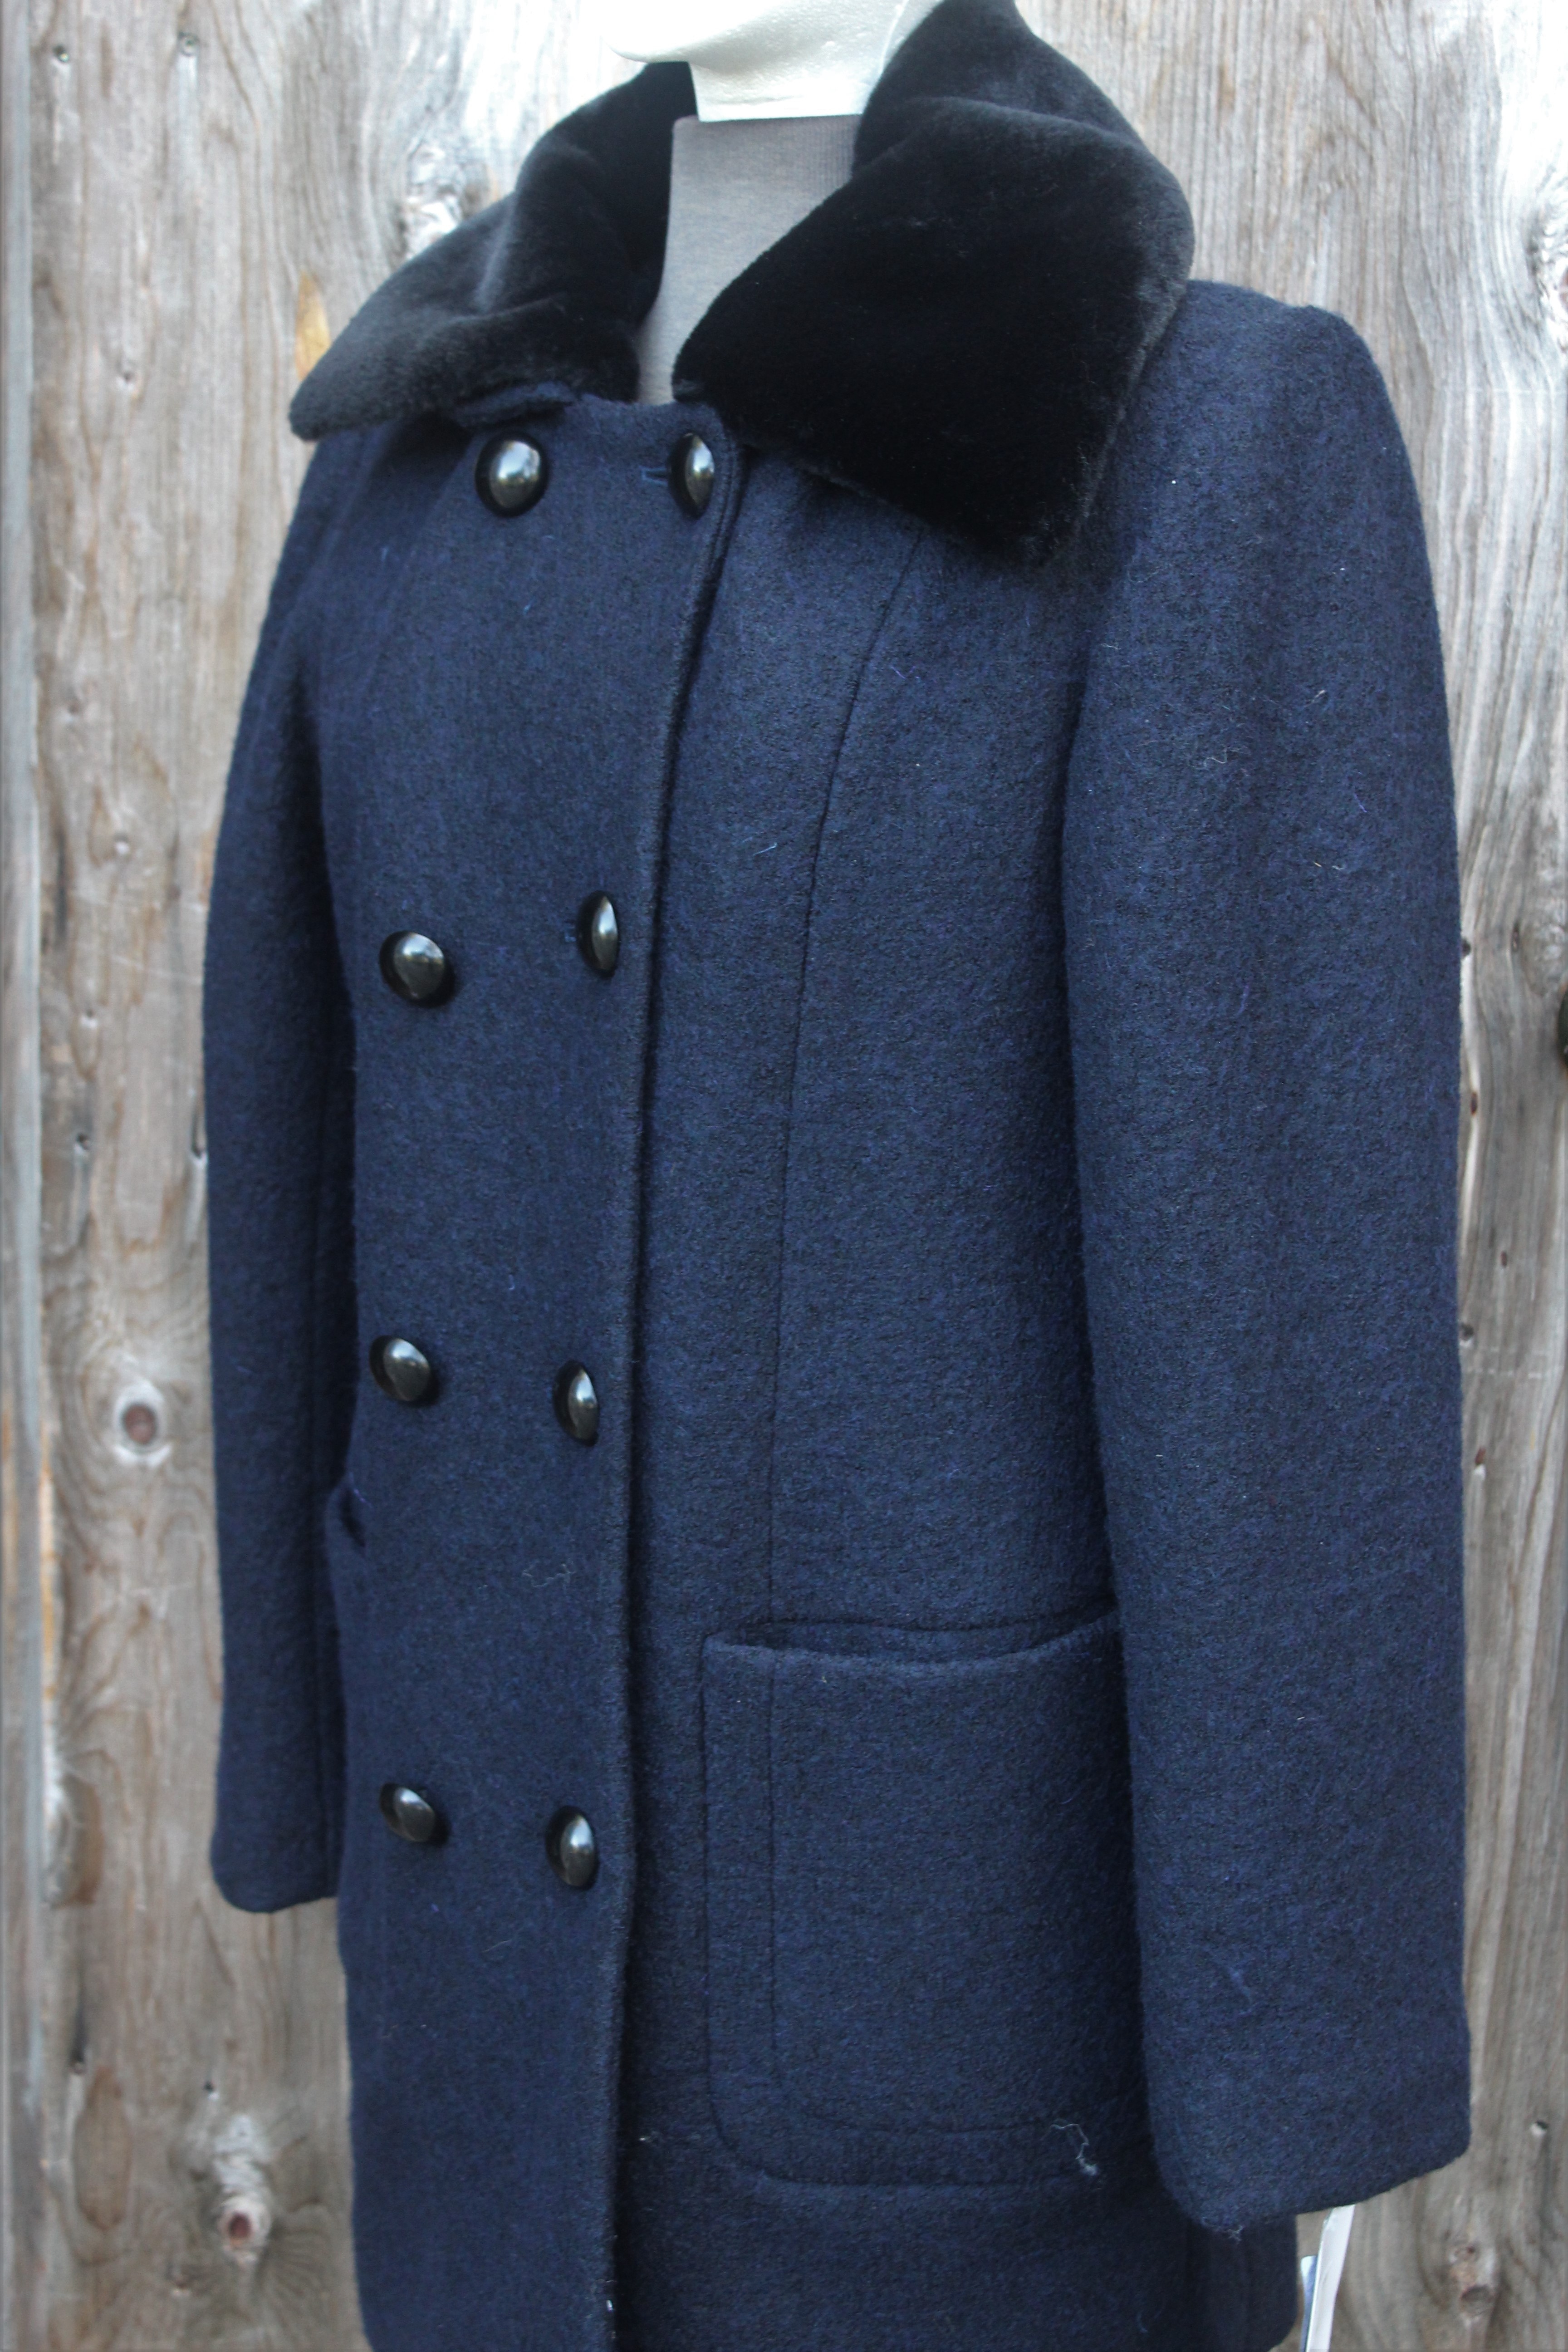 Wool- $250.00
Niccolini: Style #D1758P